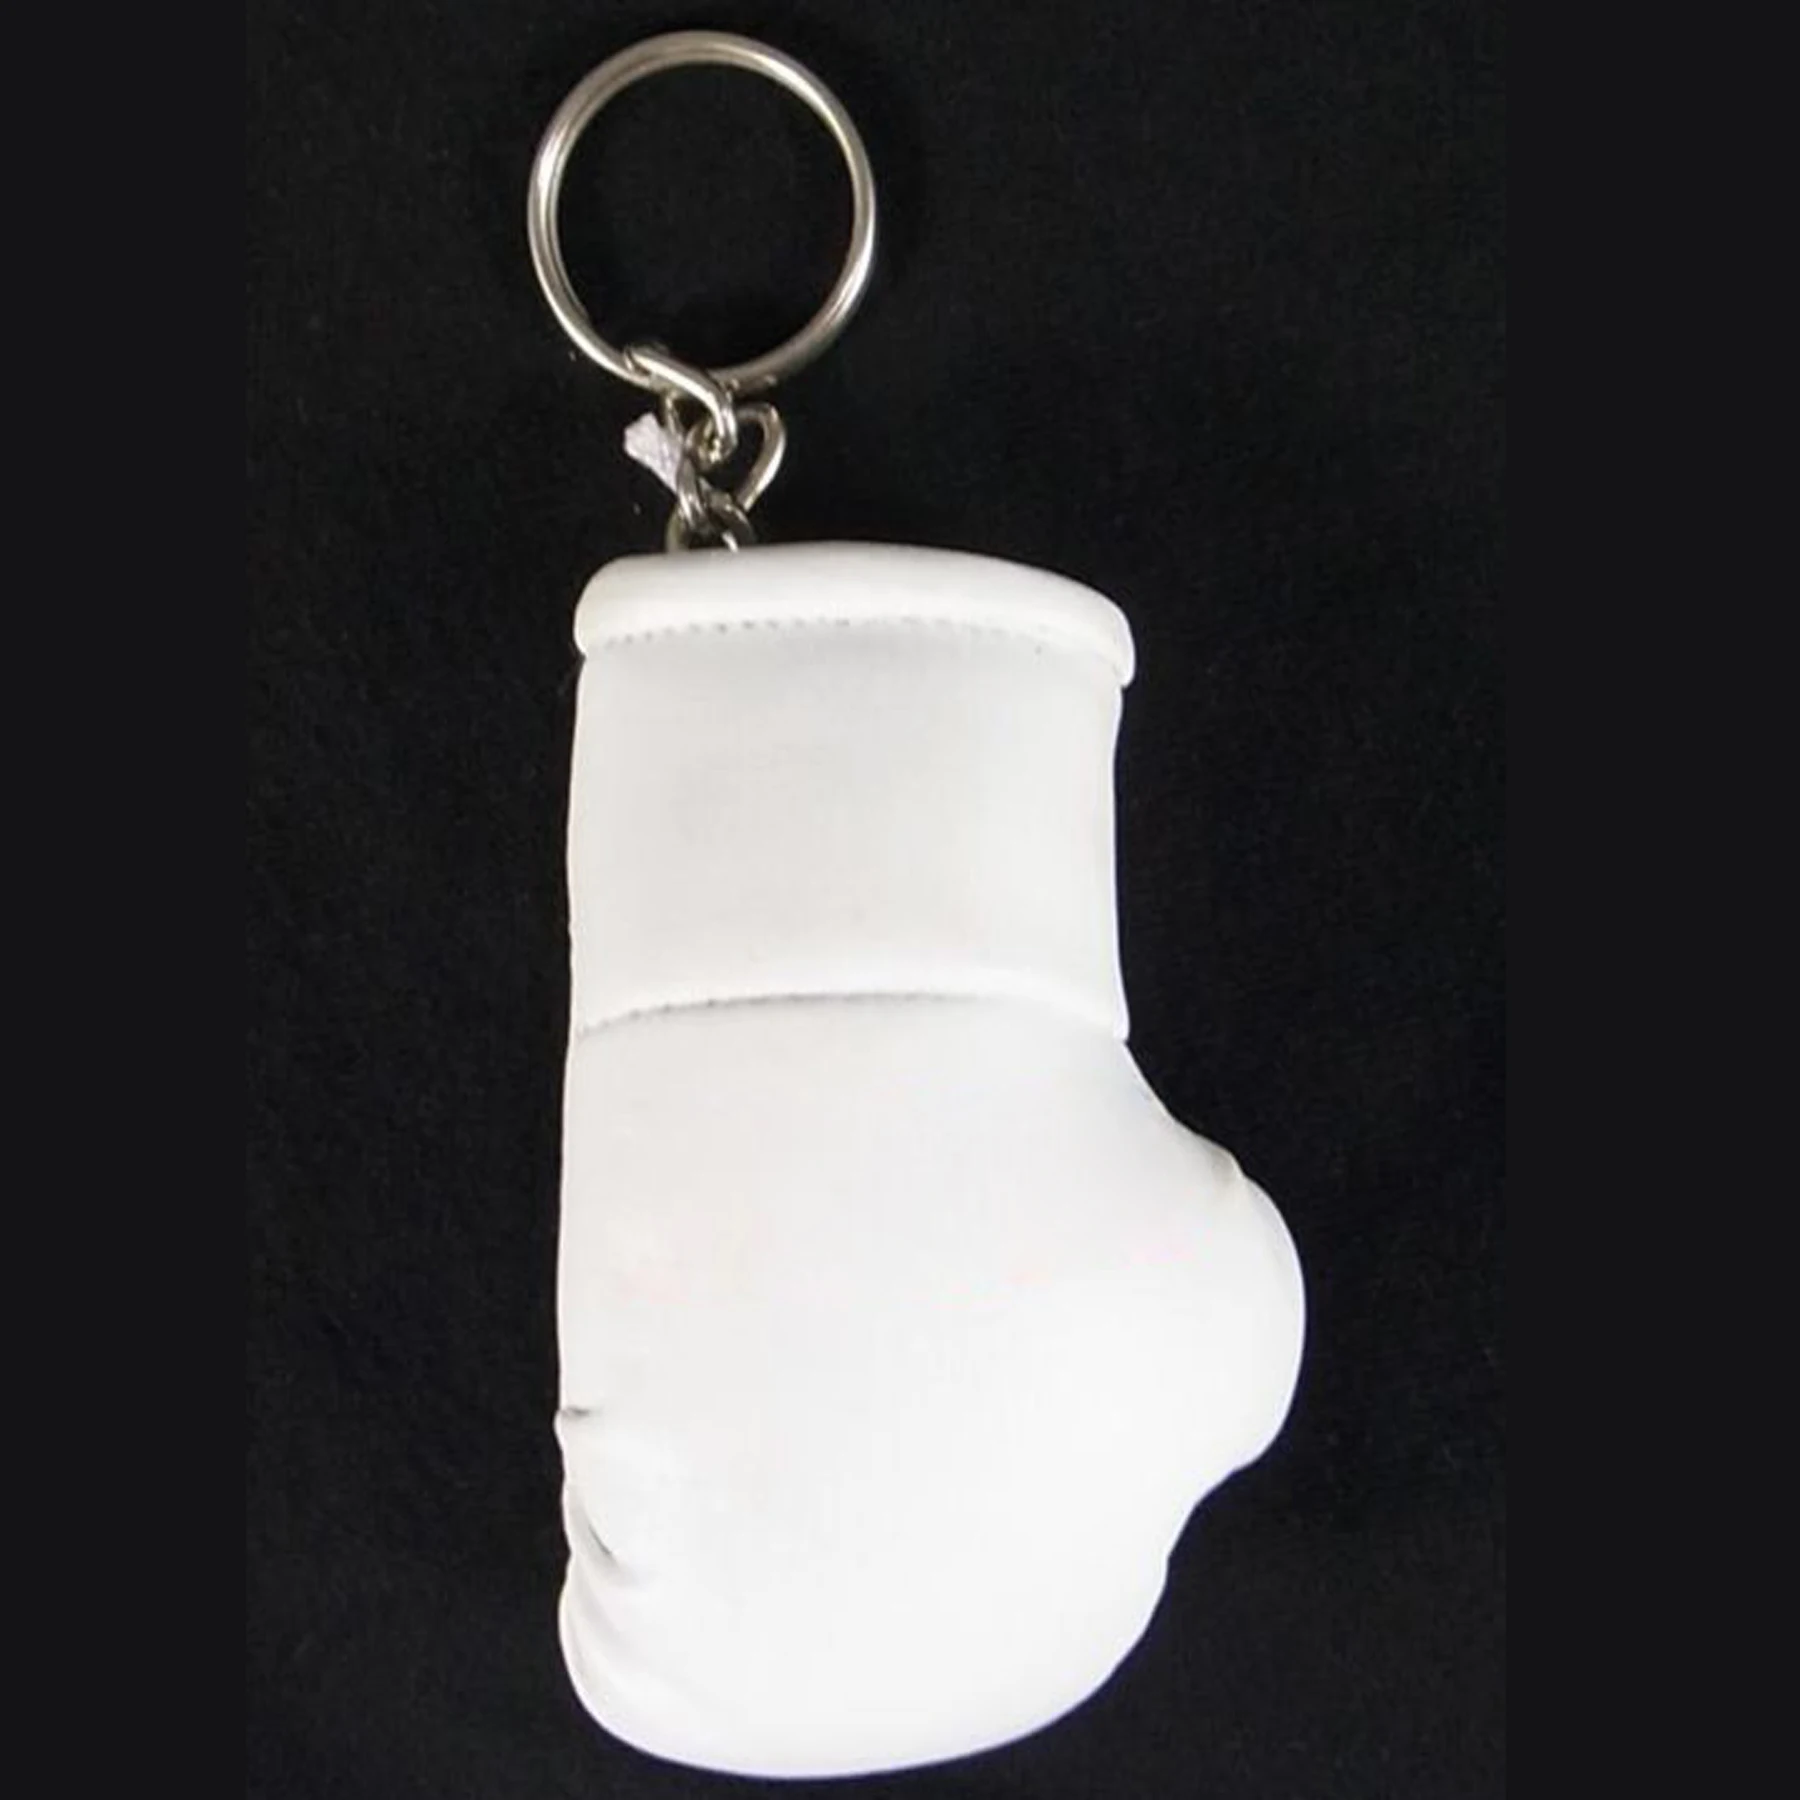 Keychain Mini boxing gloves key chain ring flag key ring cute LIECHTENSTEIN 